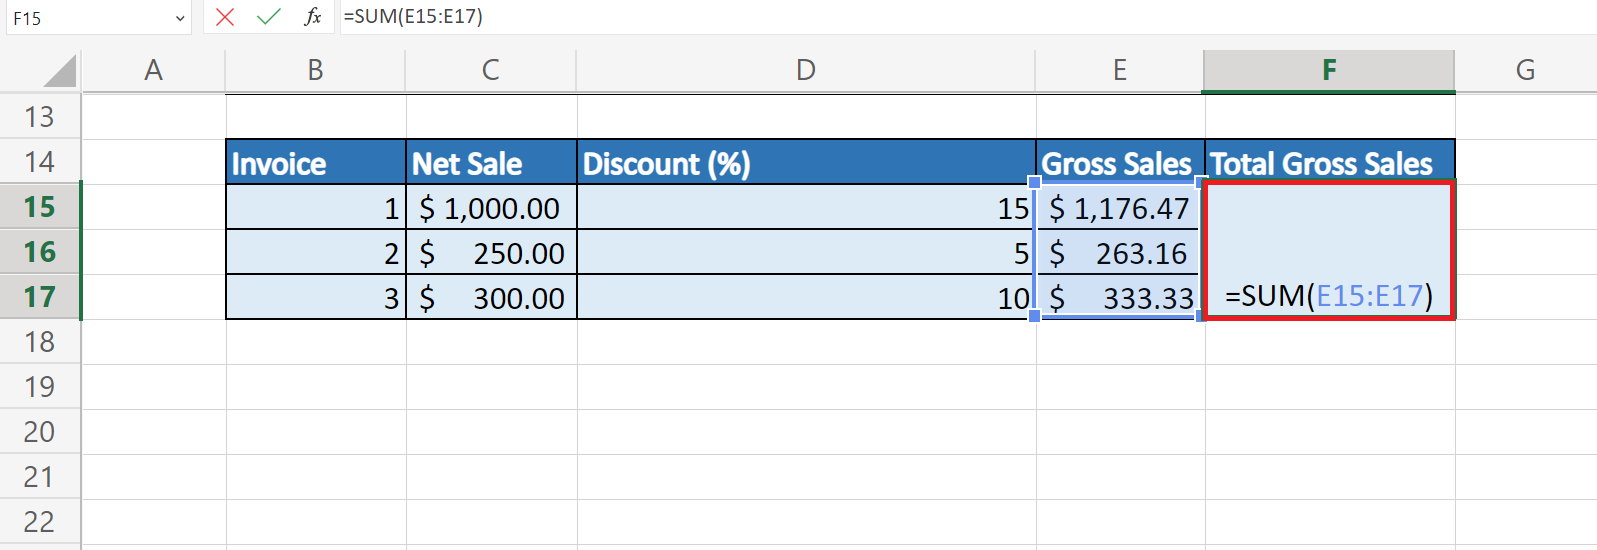 Gross Sales Formula in Excel